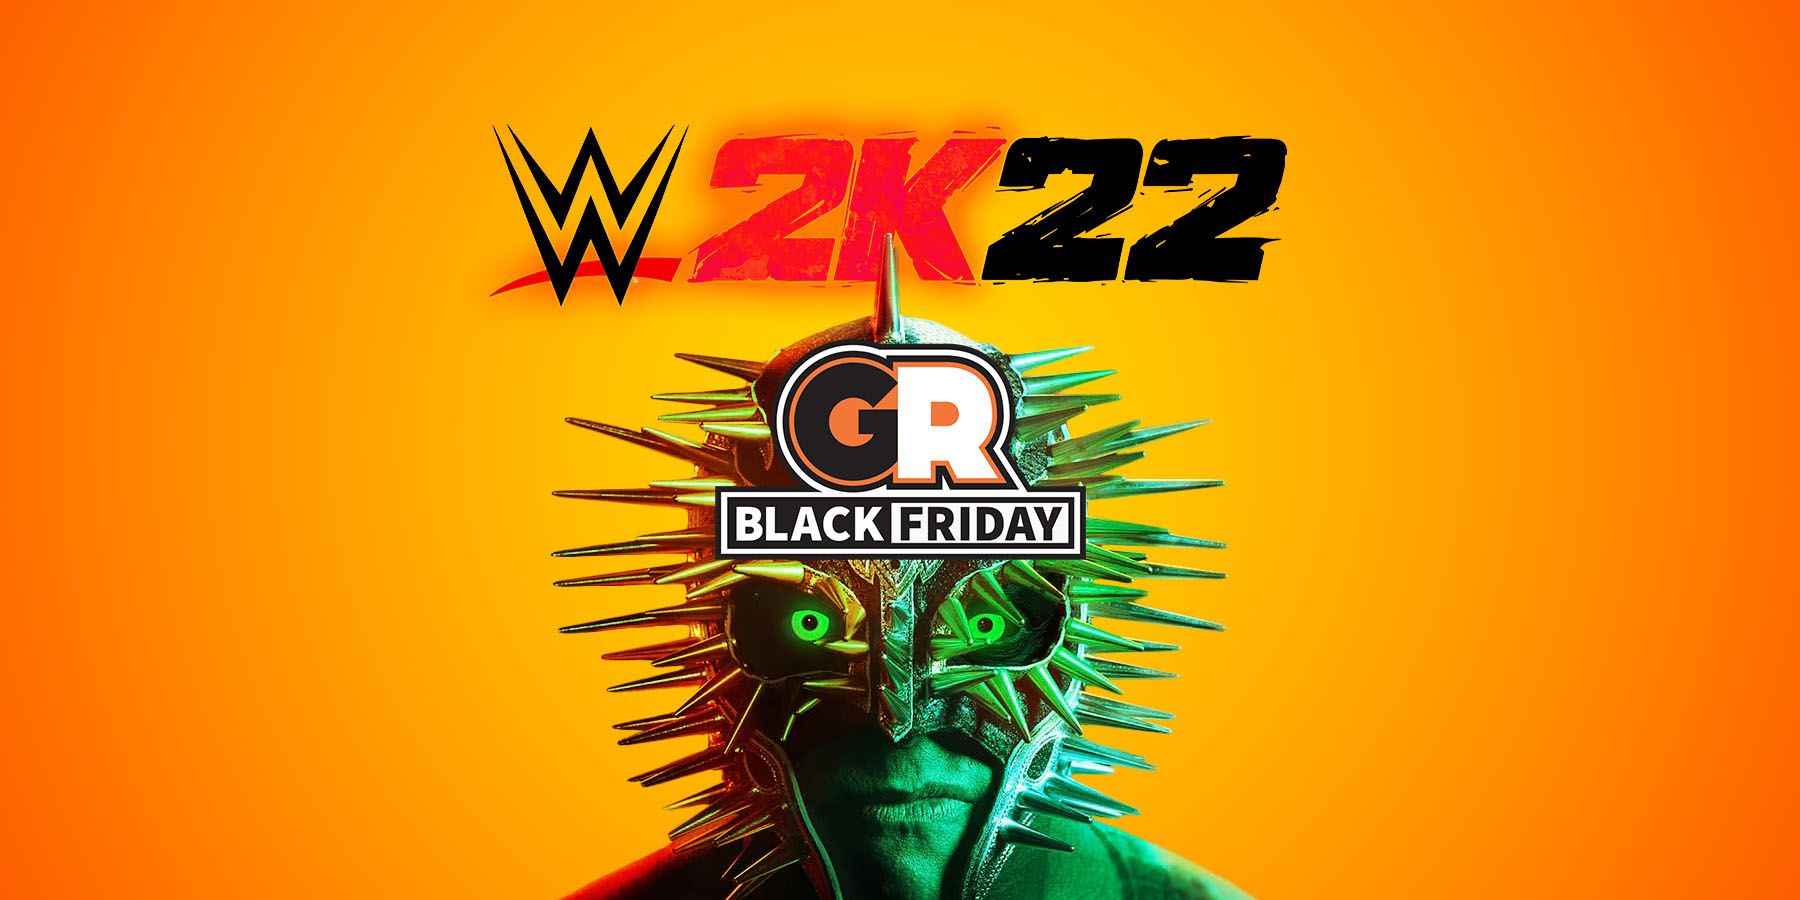 Buy WWE 2K22 - Undertaker Immortal Pack (DLC) PC Steam key! Cheap price